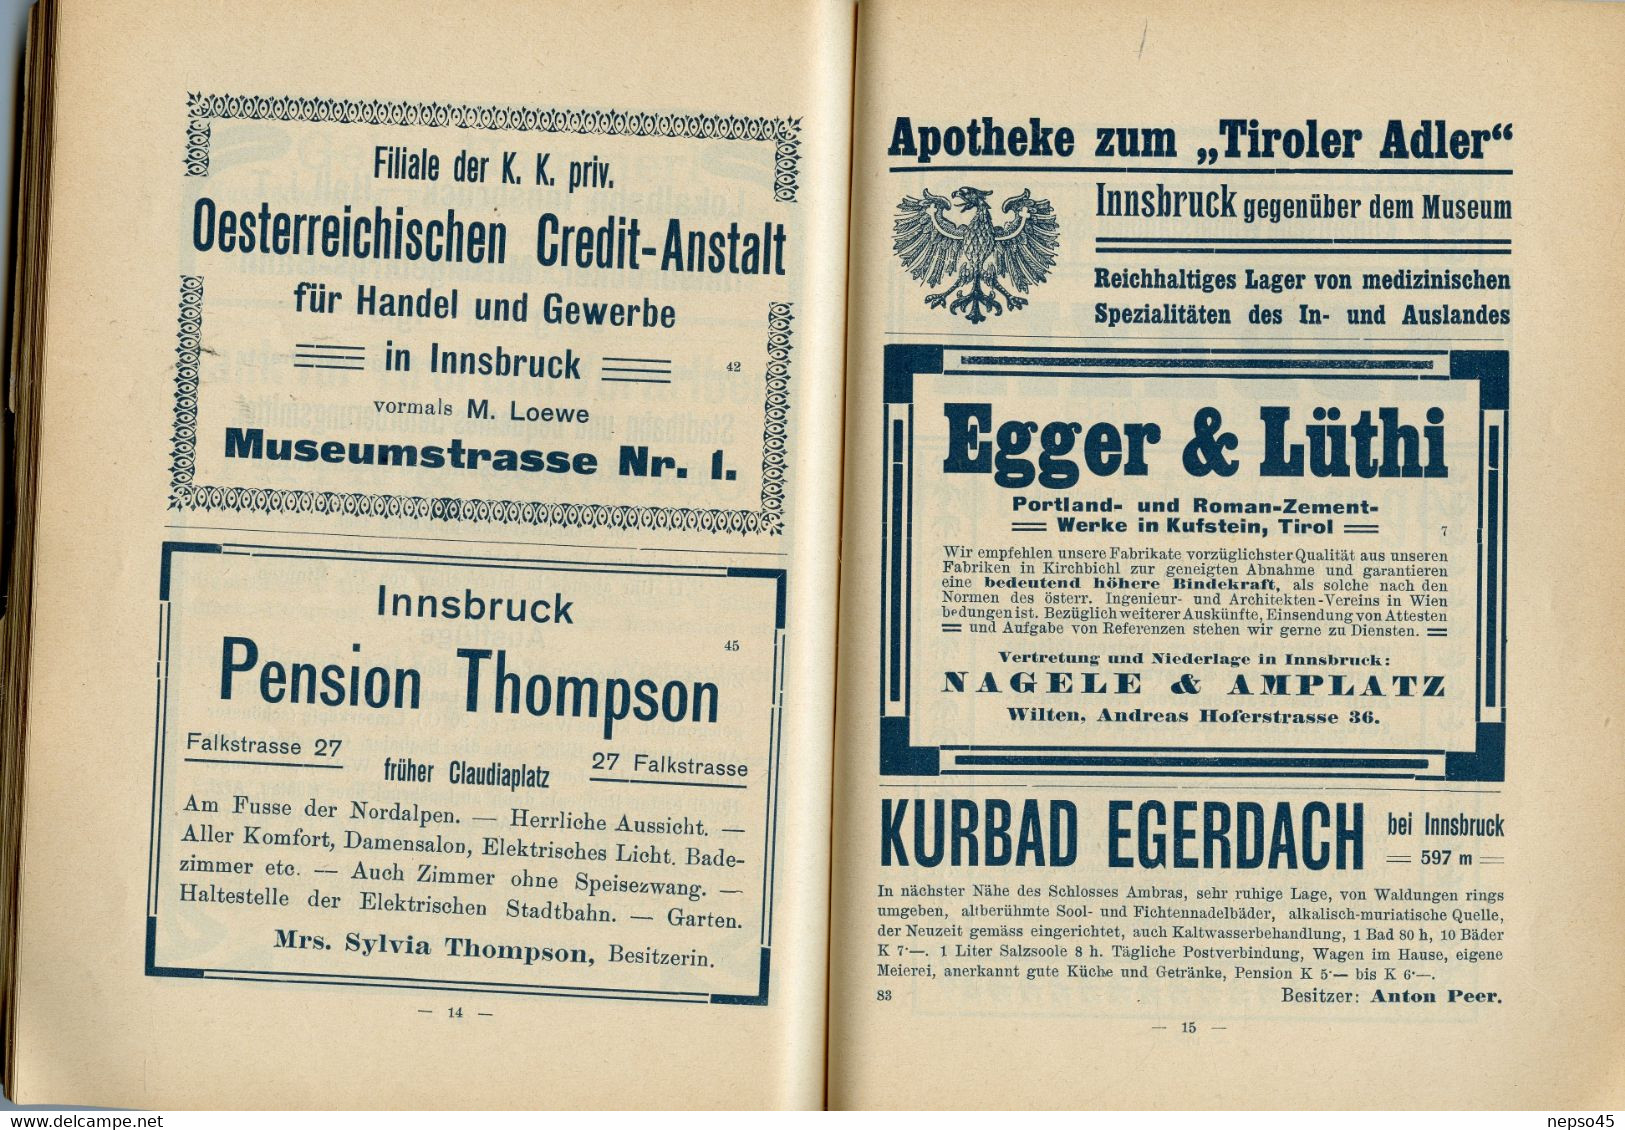 Autriche.Insbruck und seine Umgebung.Guide touristique.Année 1906.